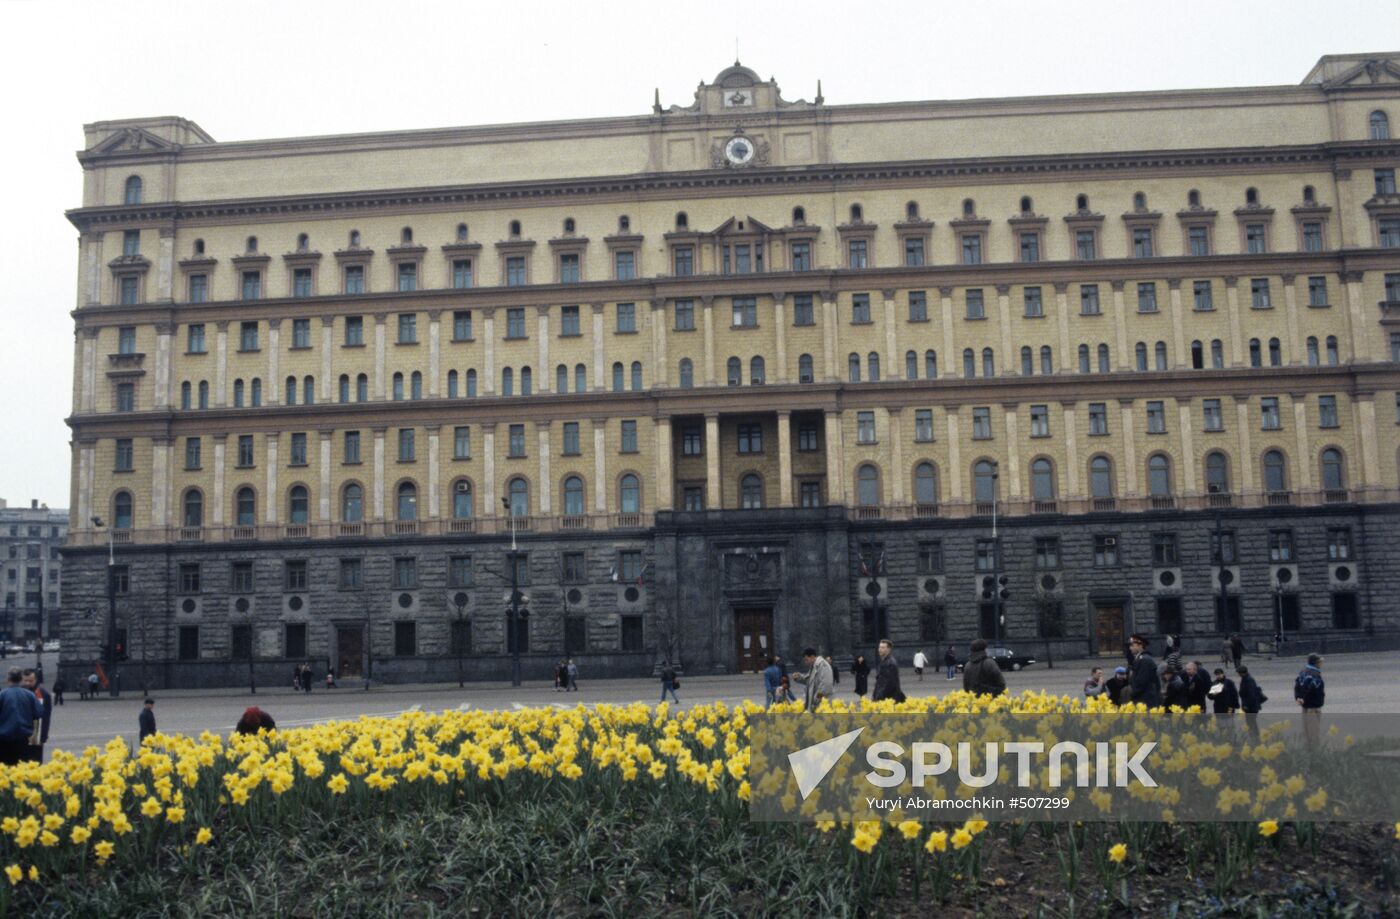 Former KGB headquarters